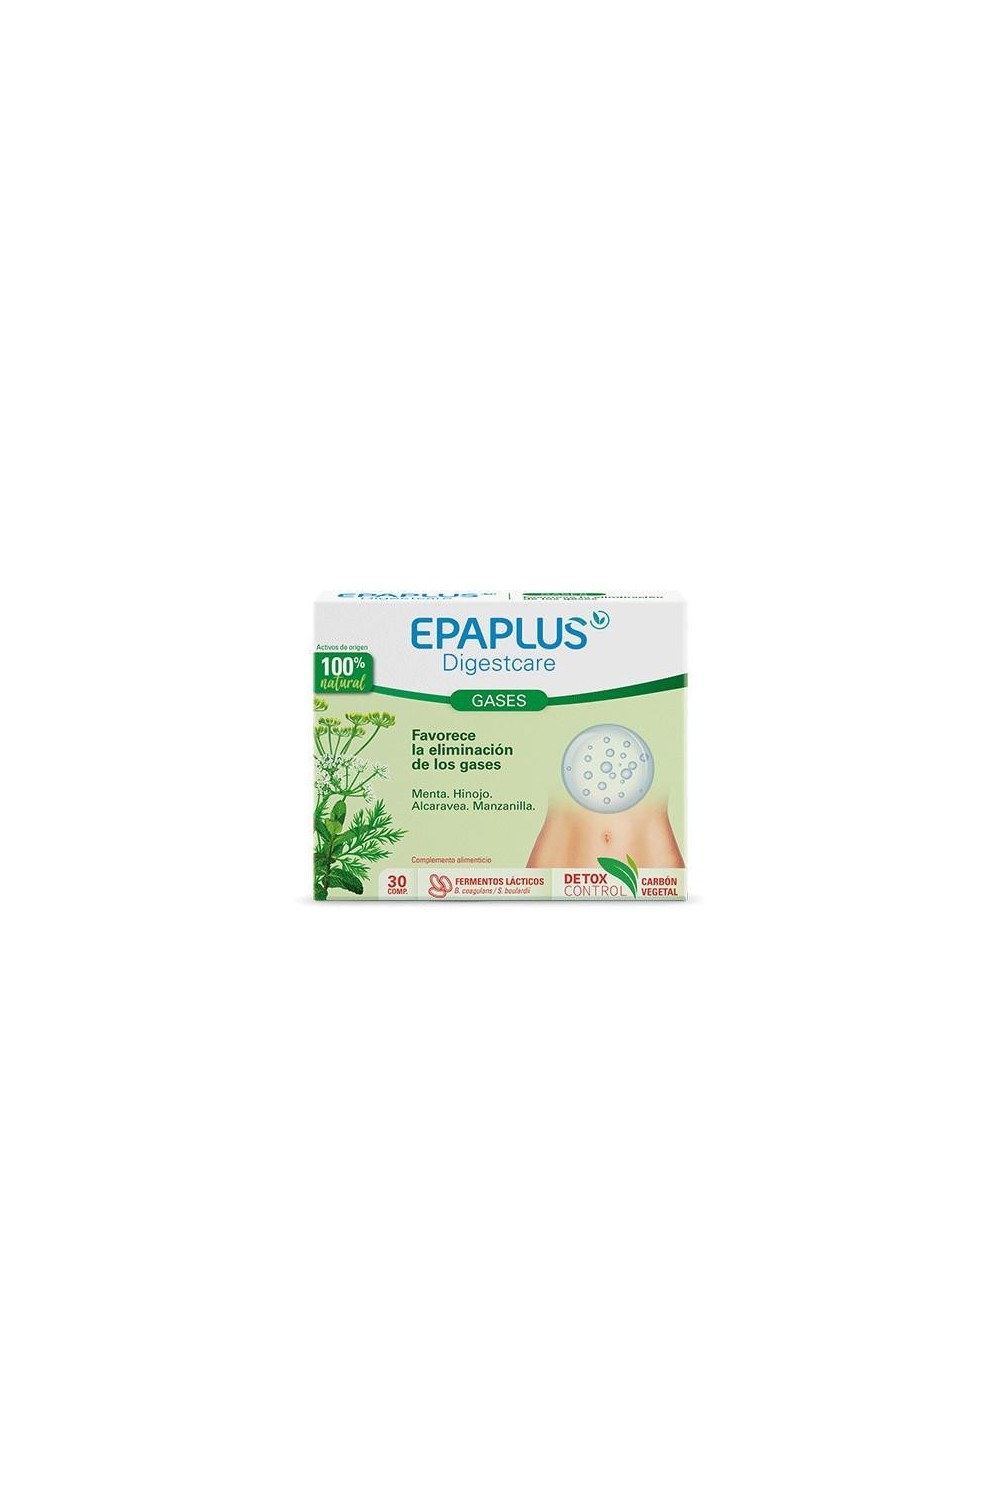 Epaplus Gases 30 Tablets